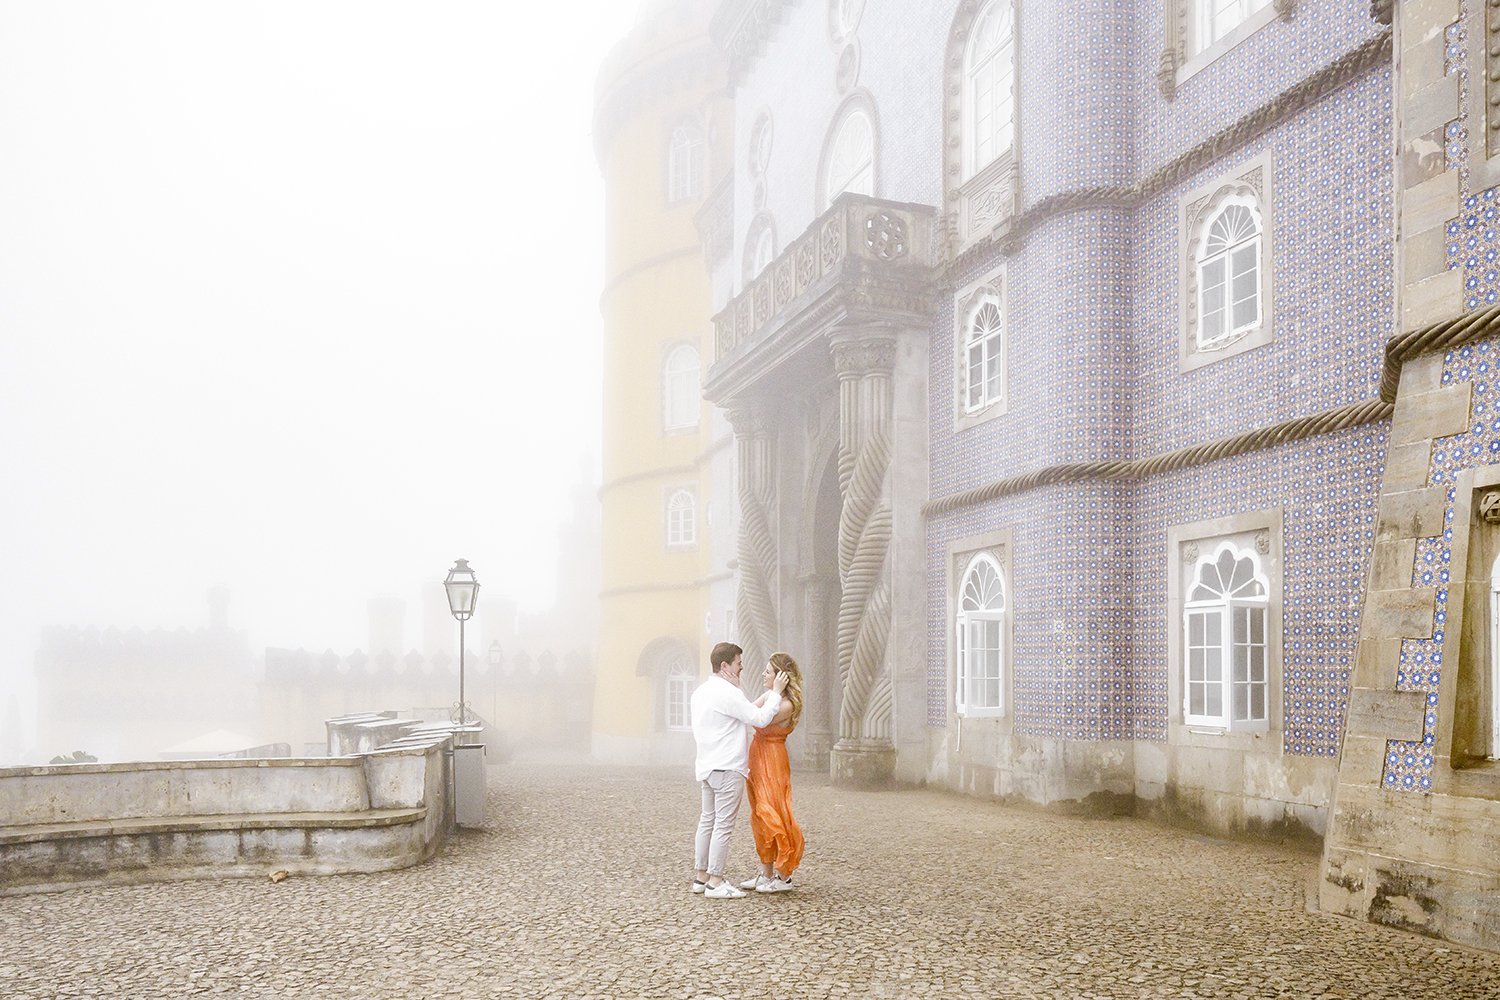 pena-palace-sintra-surprise-wedding-proposal-photographer-ana-lucia-terra-fotografia-2.jpg